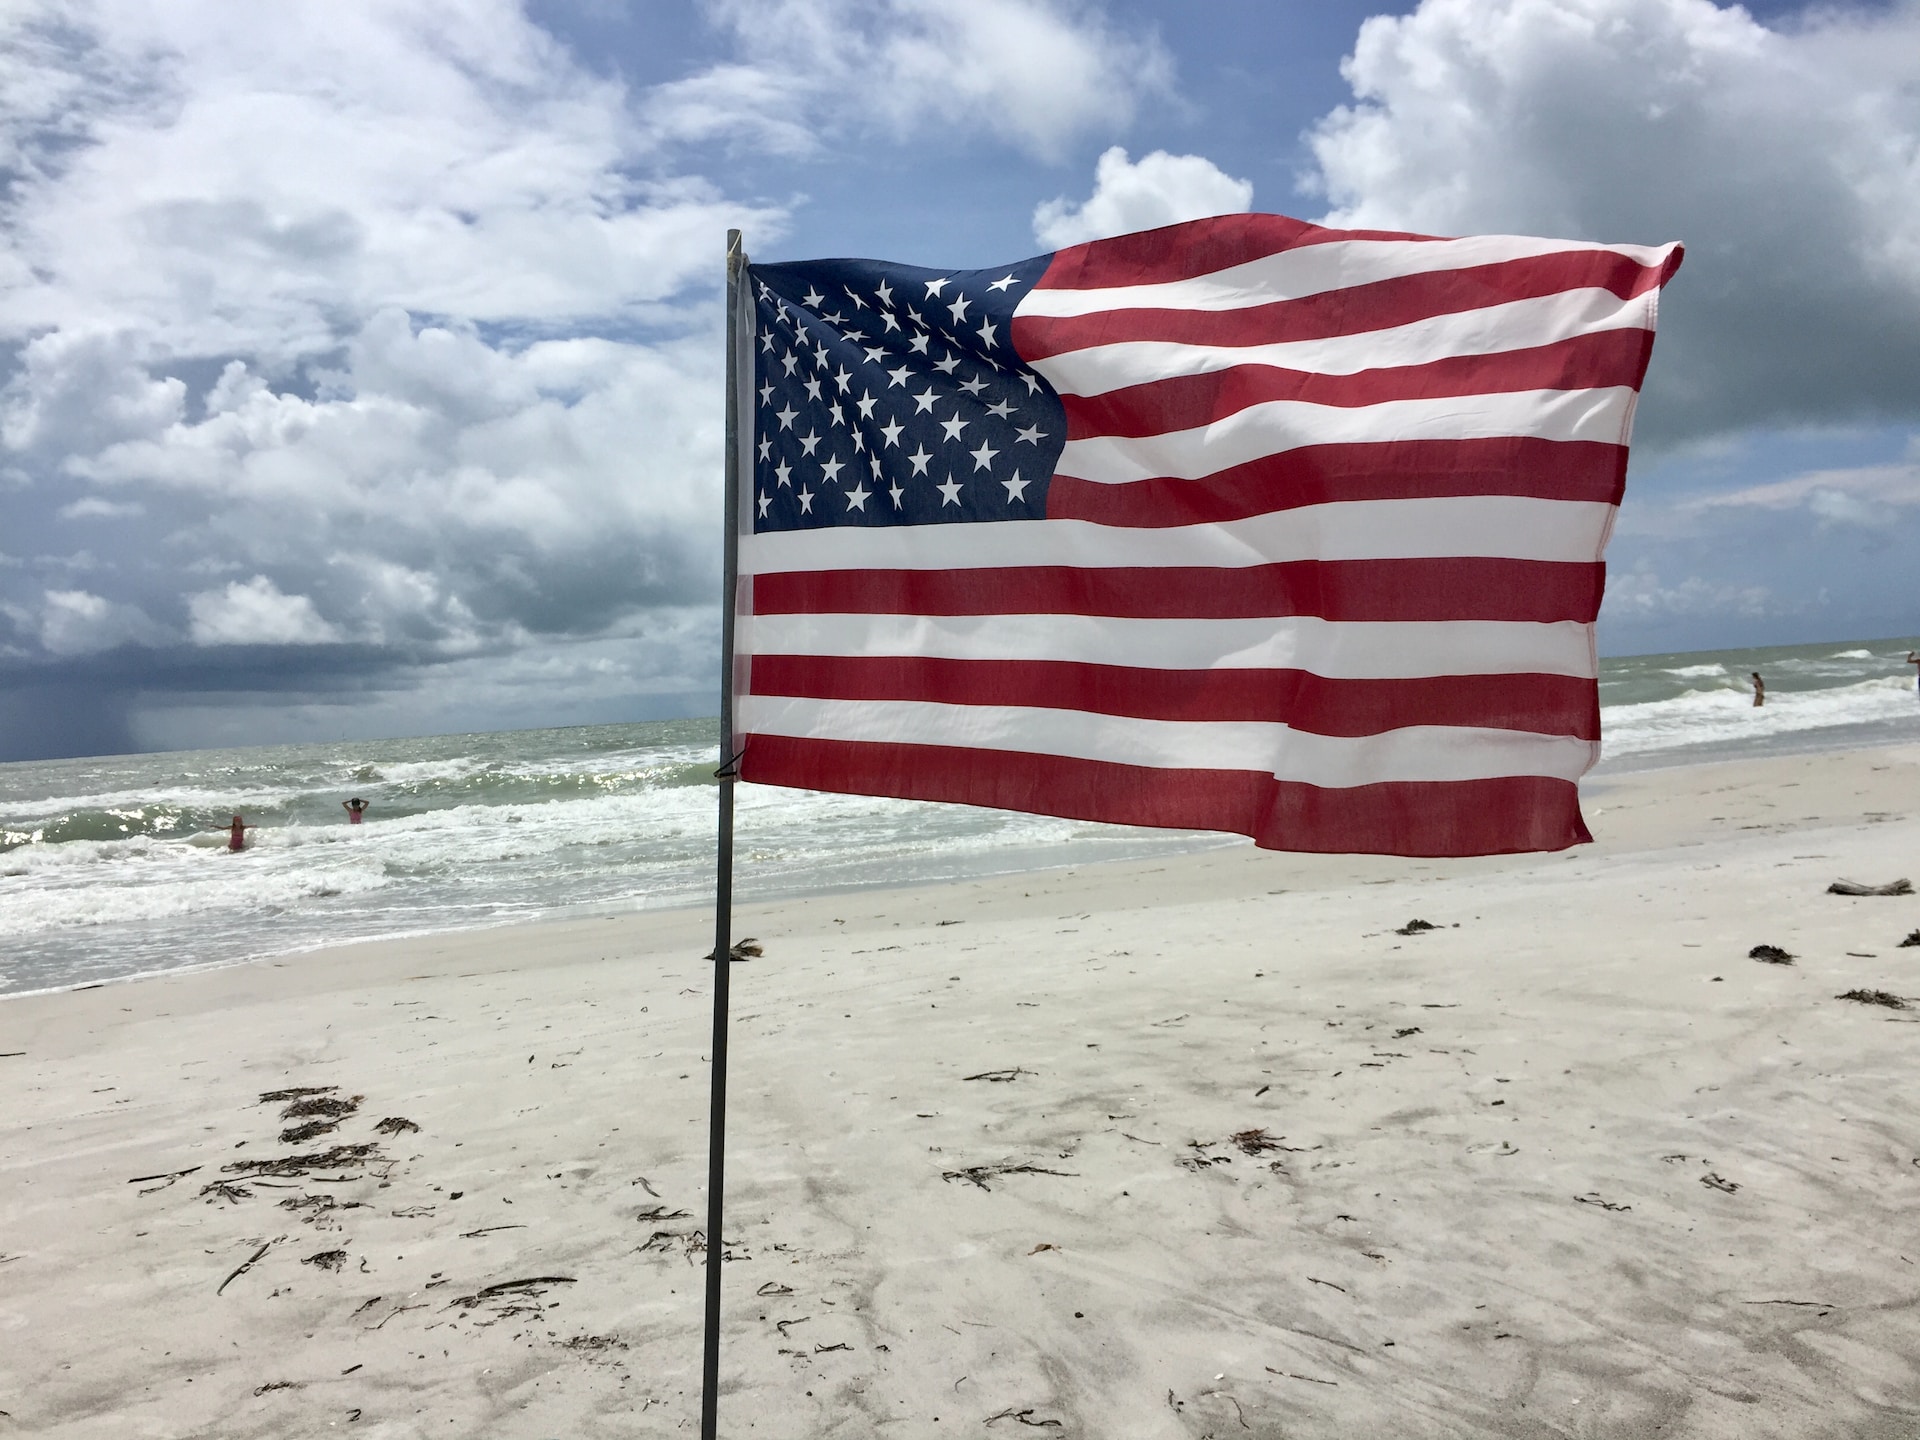 the U.S. Stars and Stripes flag on a beach